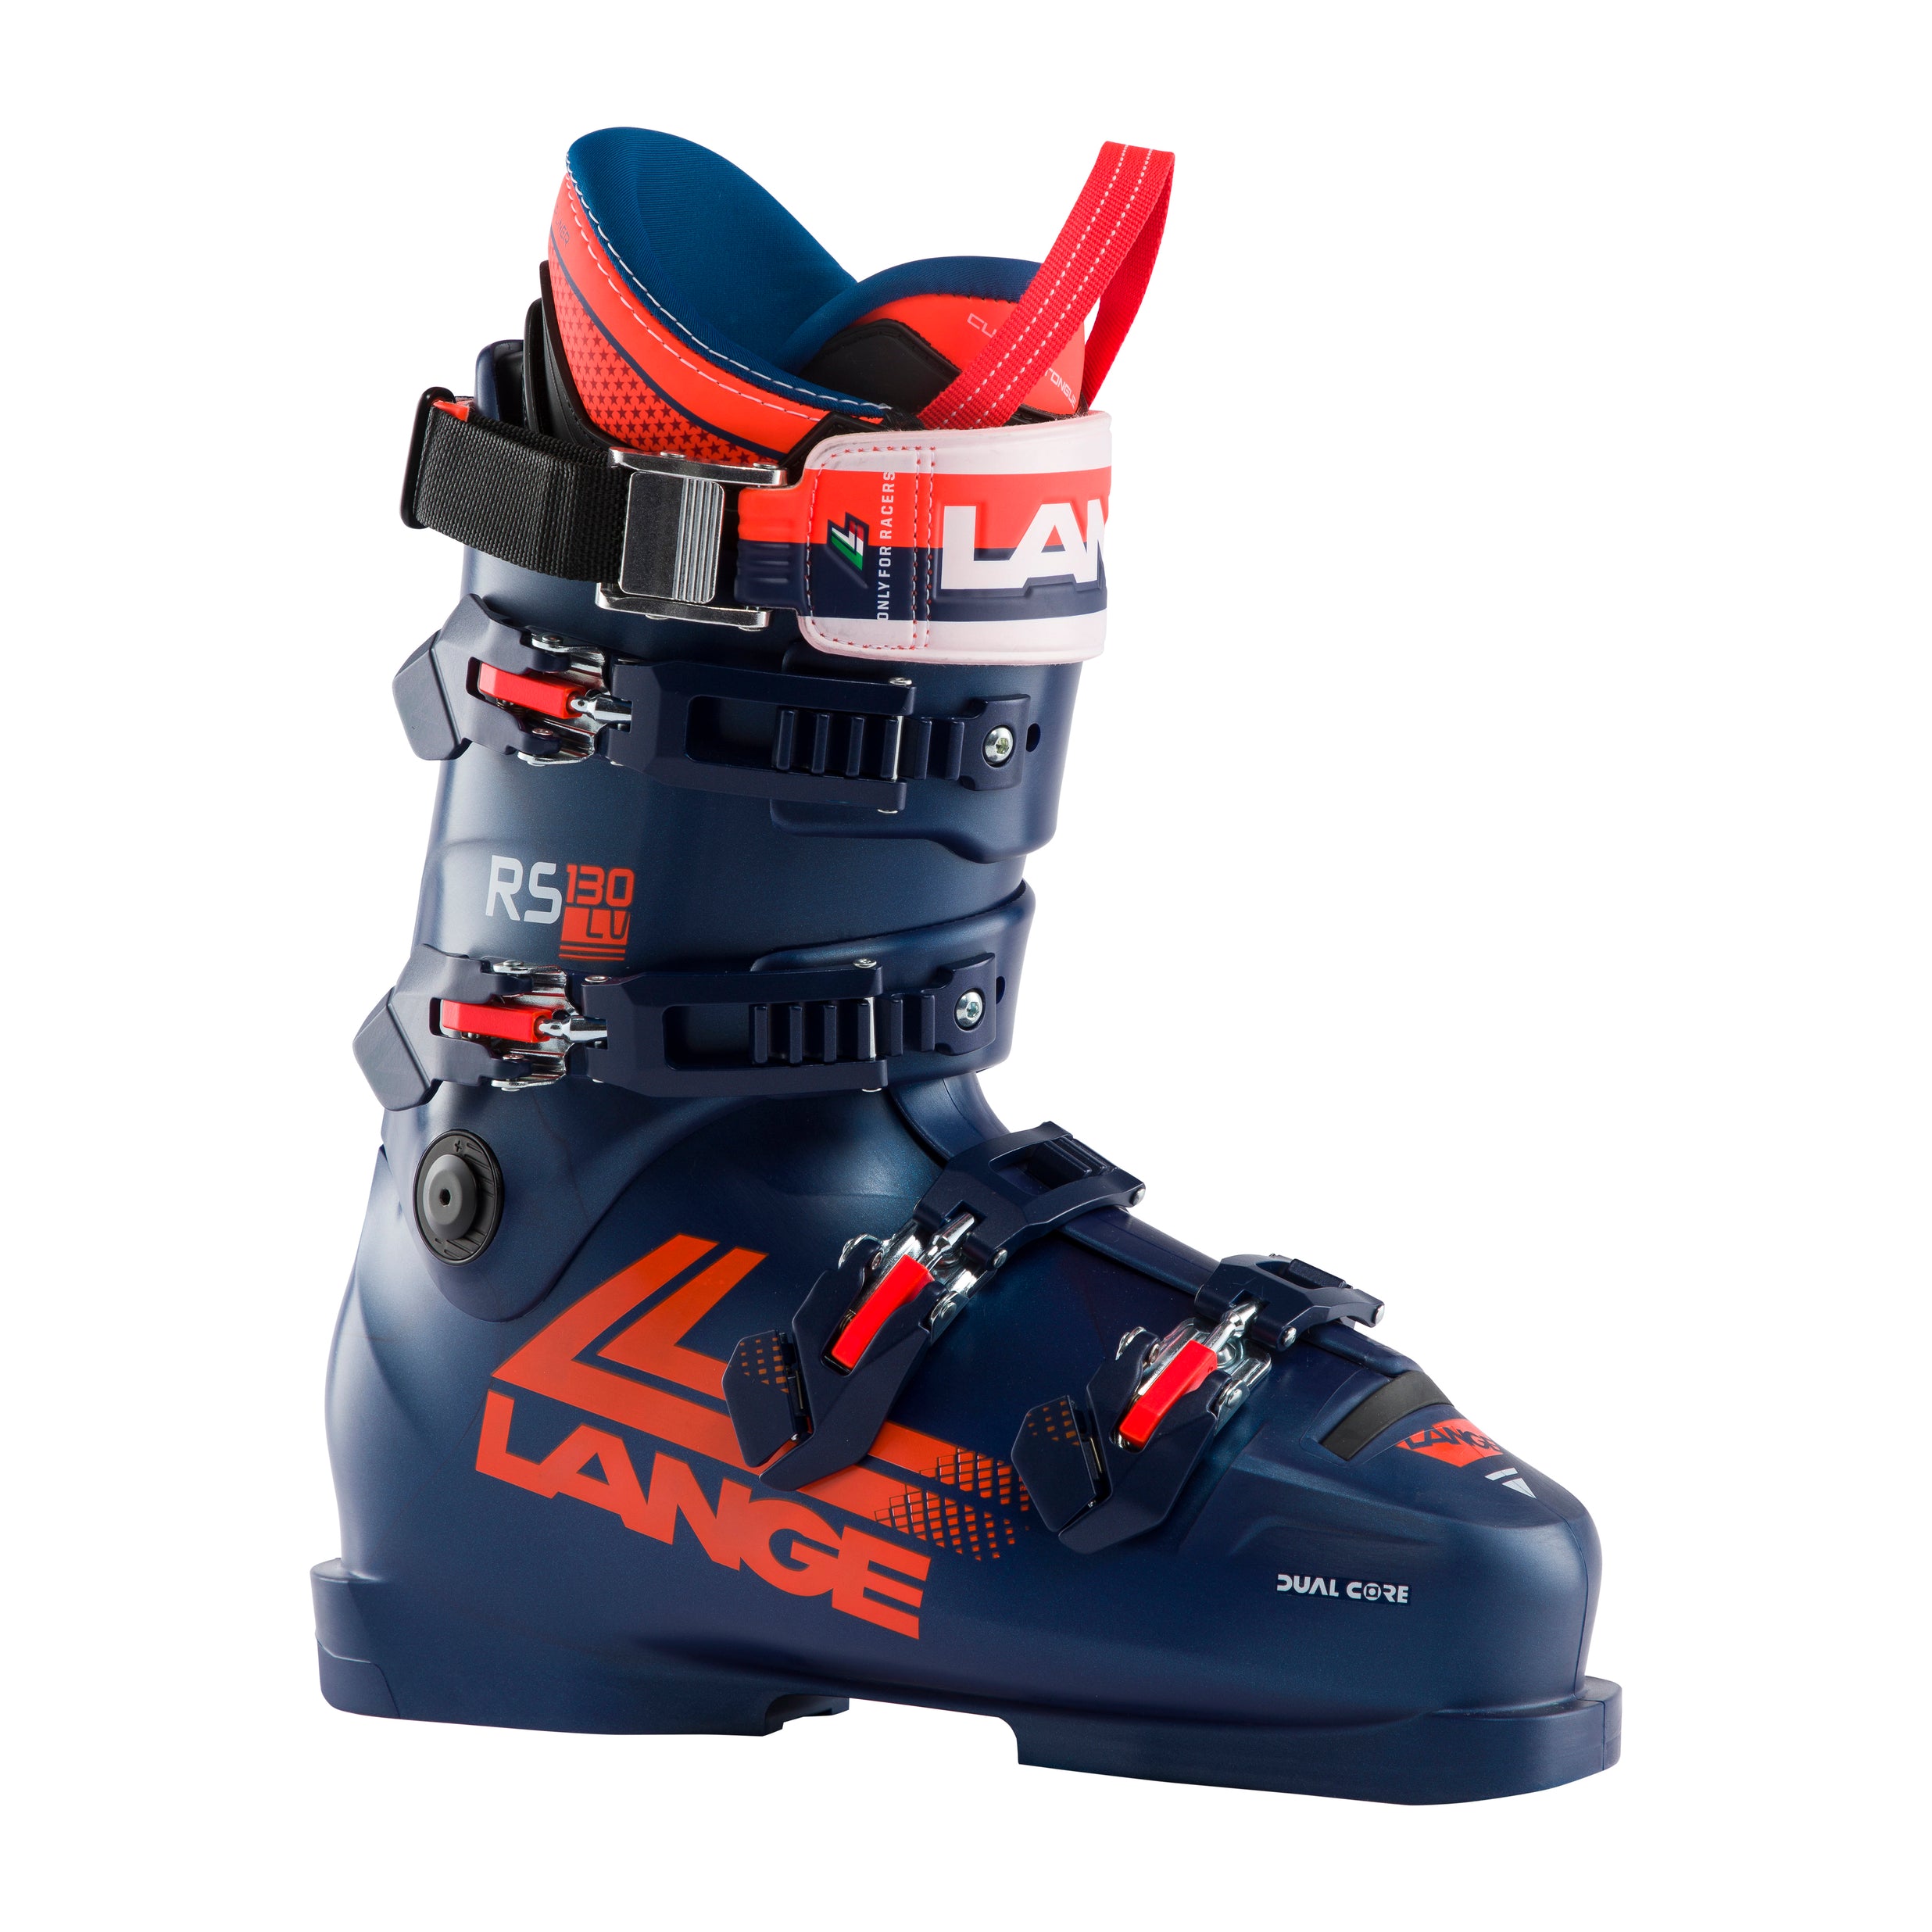 Lange RS 130 LV ski boot, dark blue with neon orange accents.